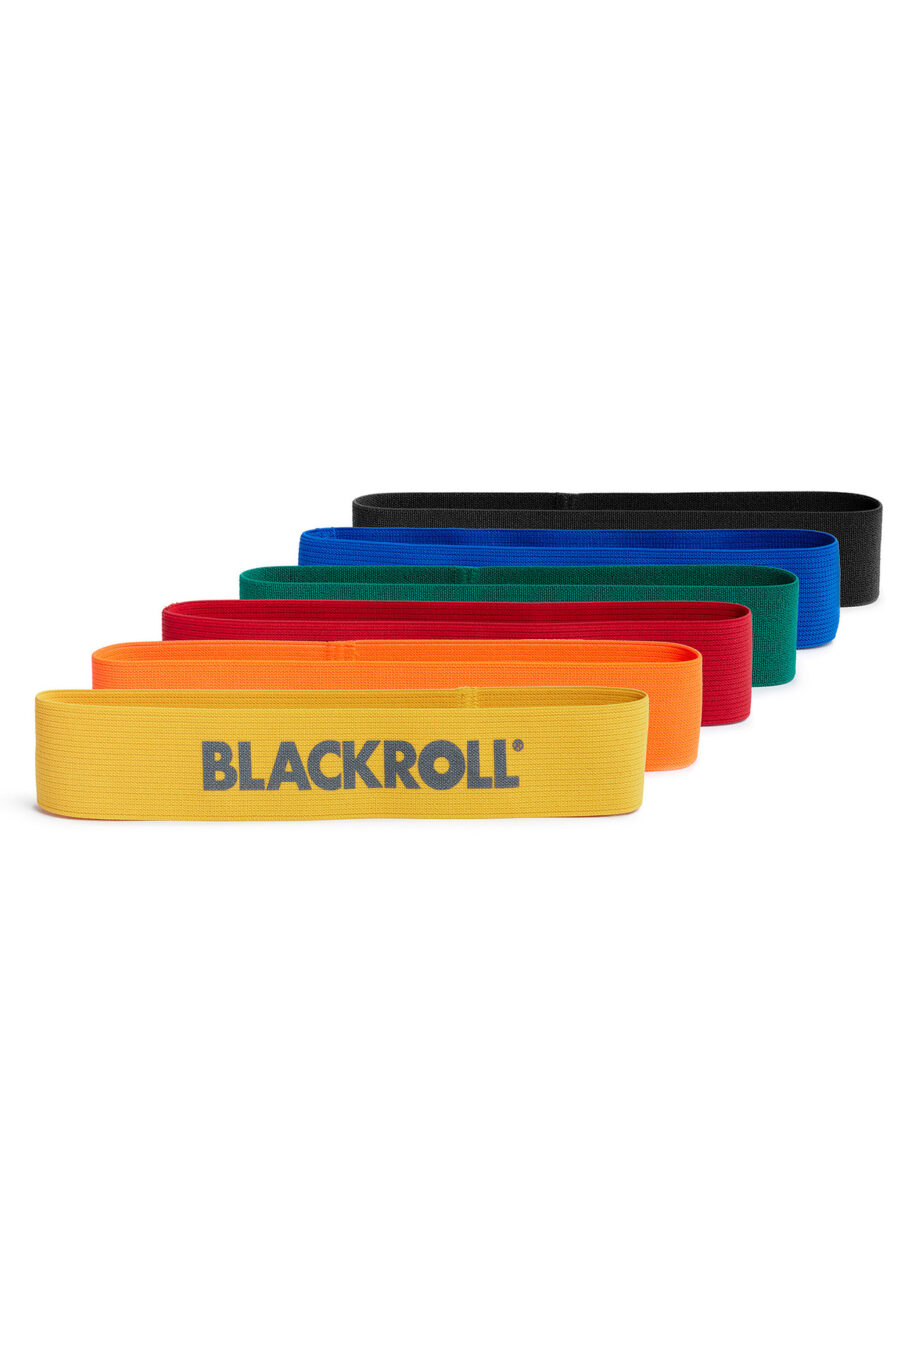 blackroll loop band 6er stand training fengbao shop 1080 wien